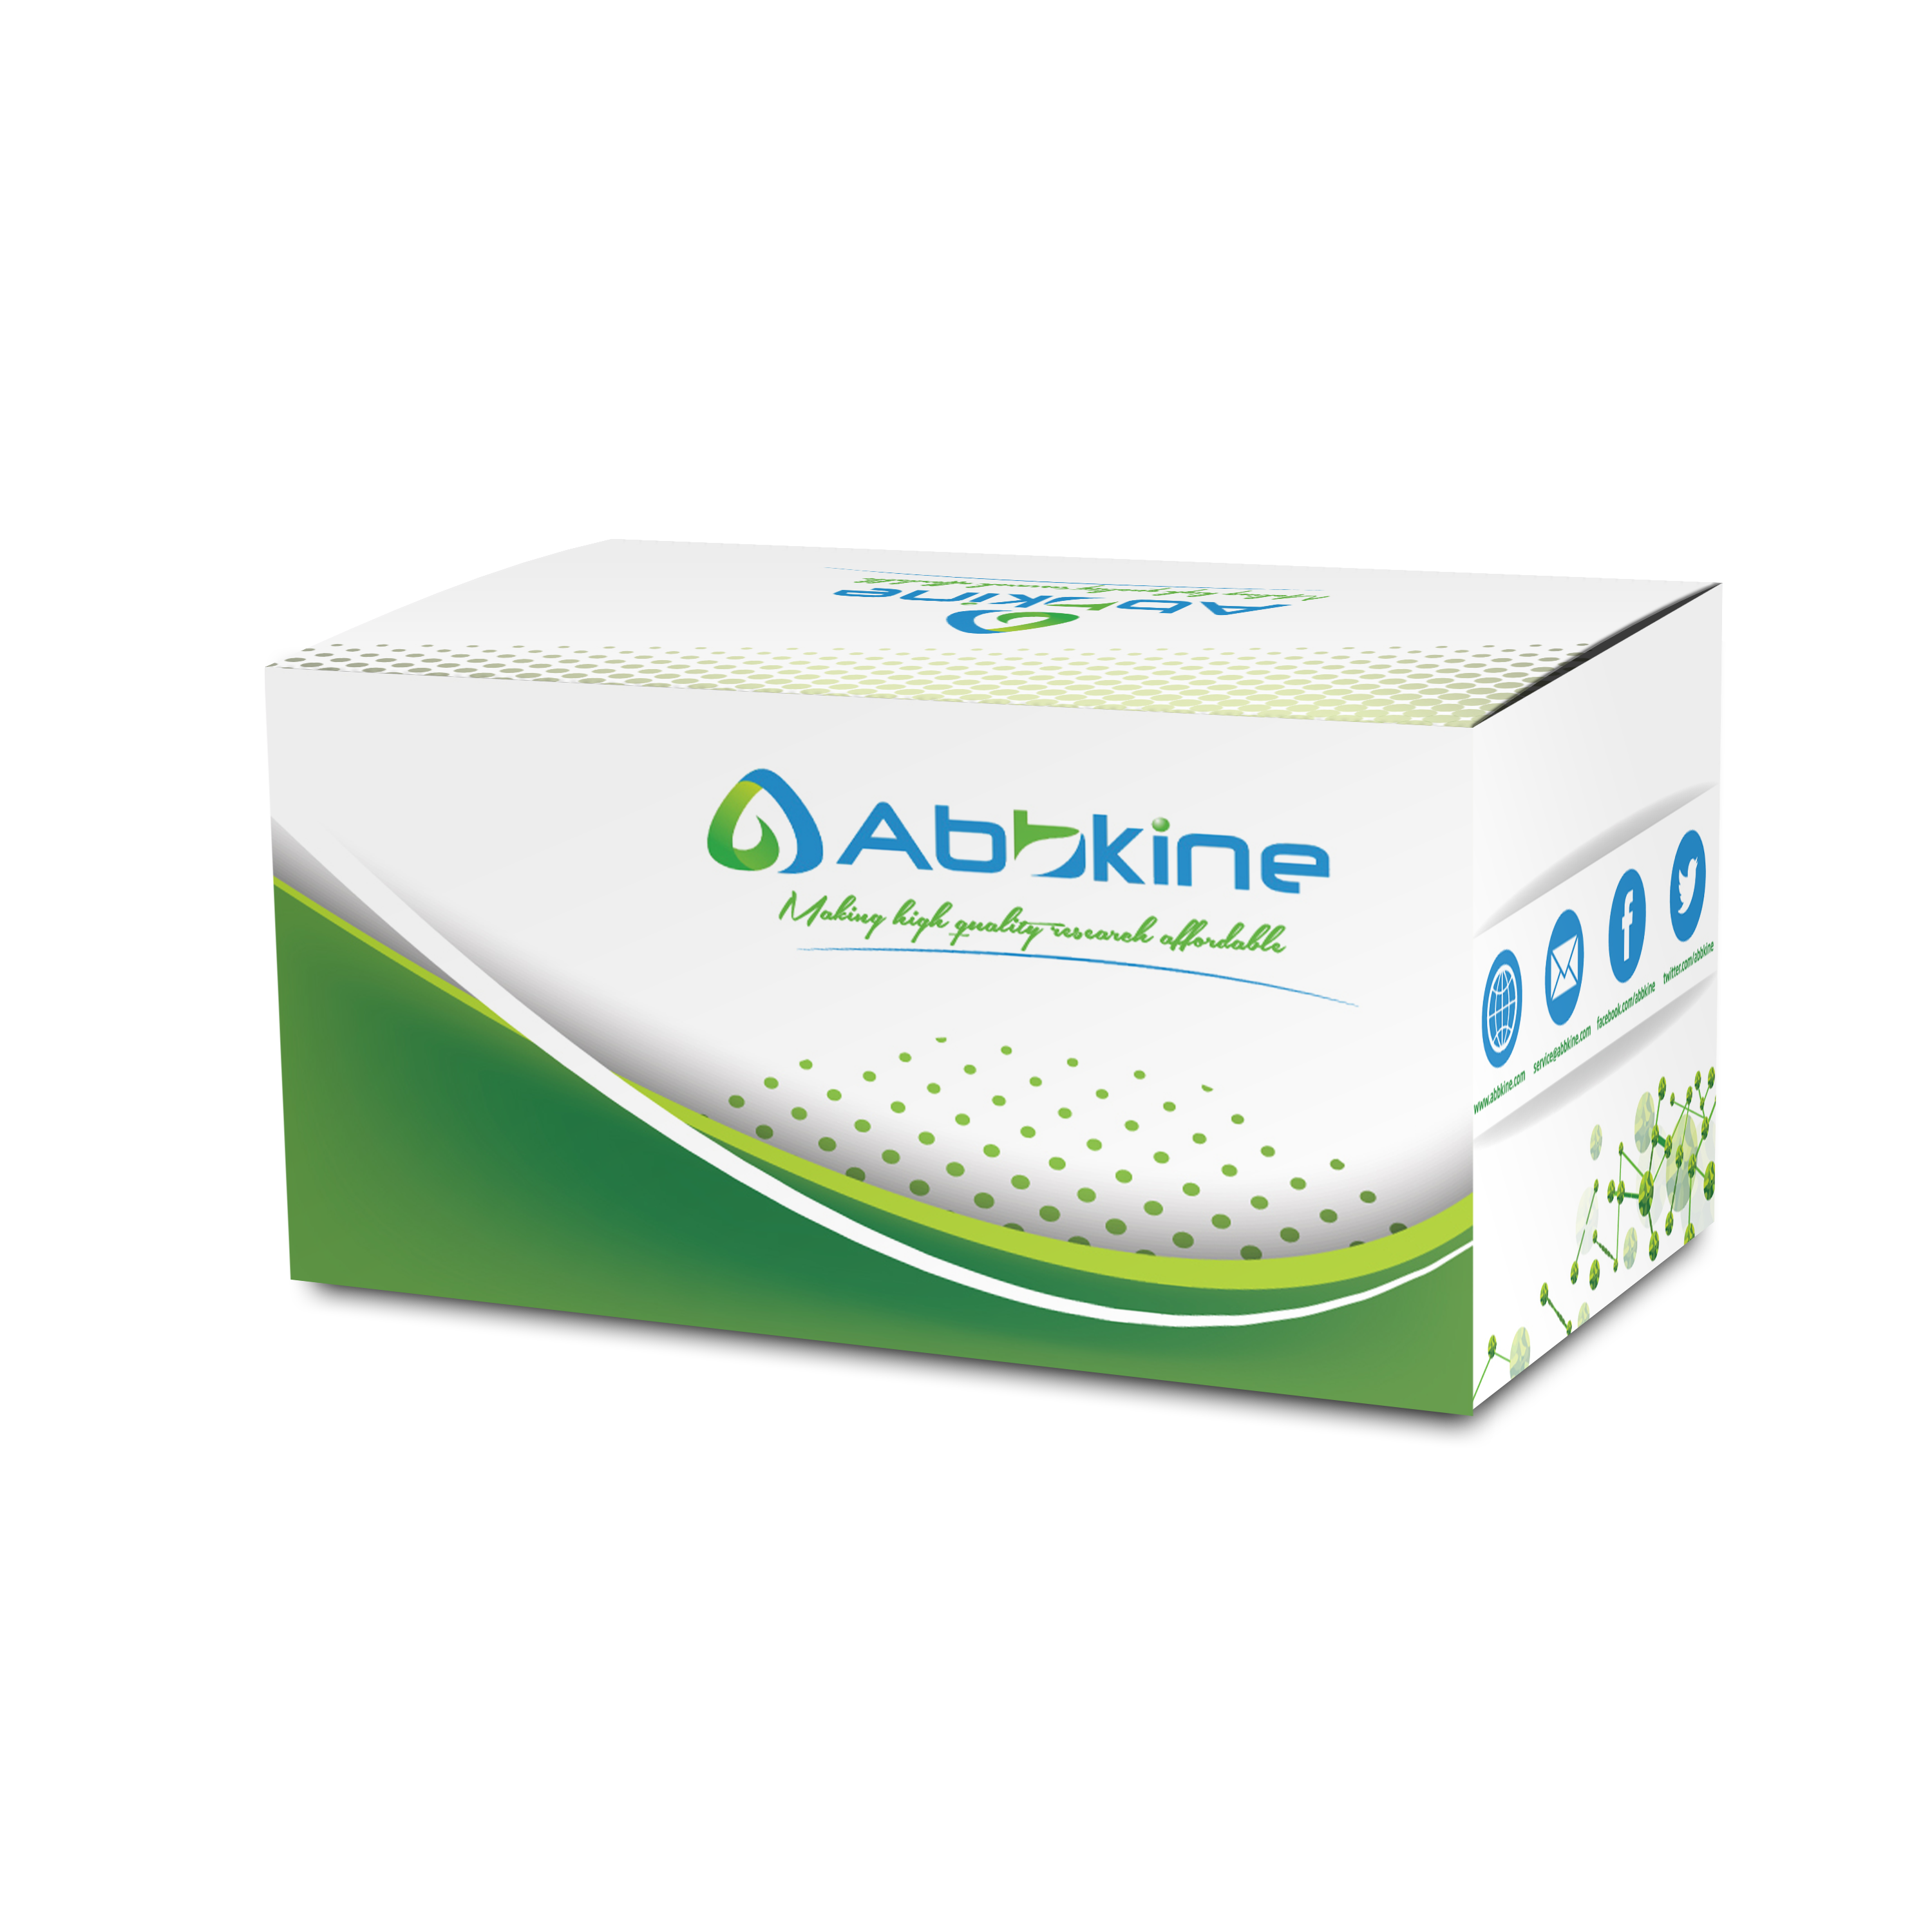 abbkine-kit.png&&Fig.CheKine Succinate Dehydrogenase?SDH) Activity Assay Kit (Colorimetric)